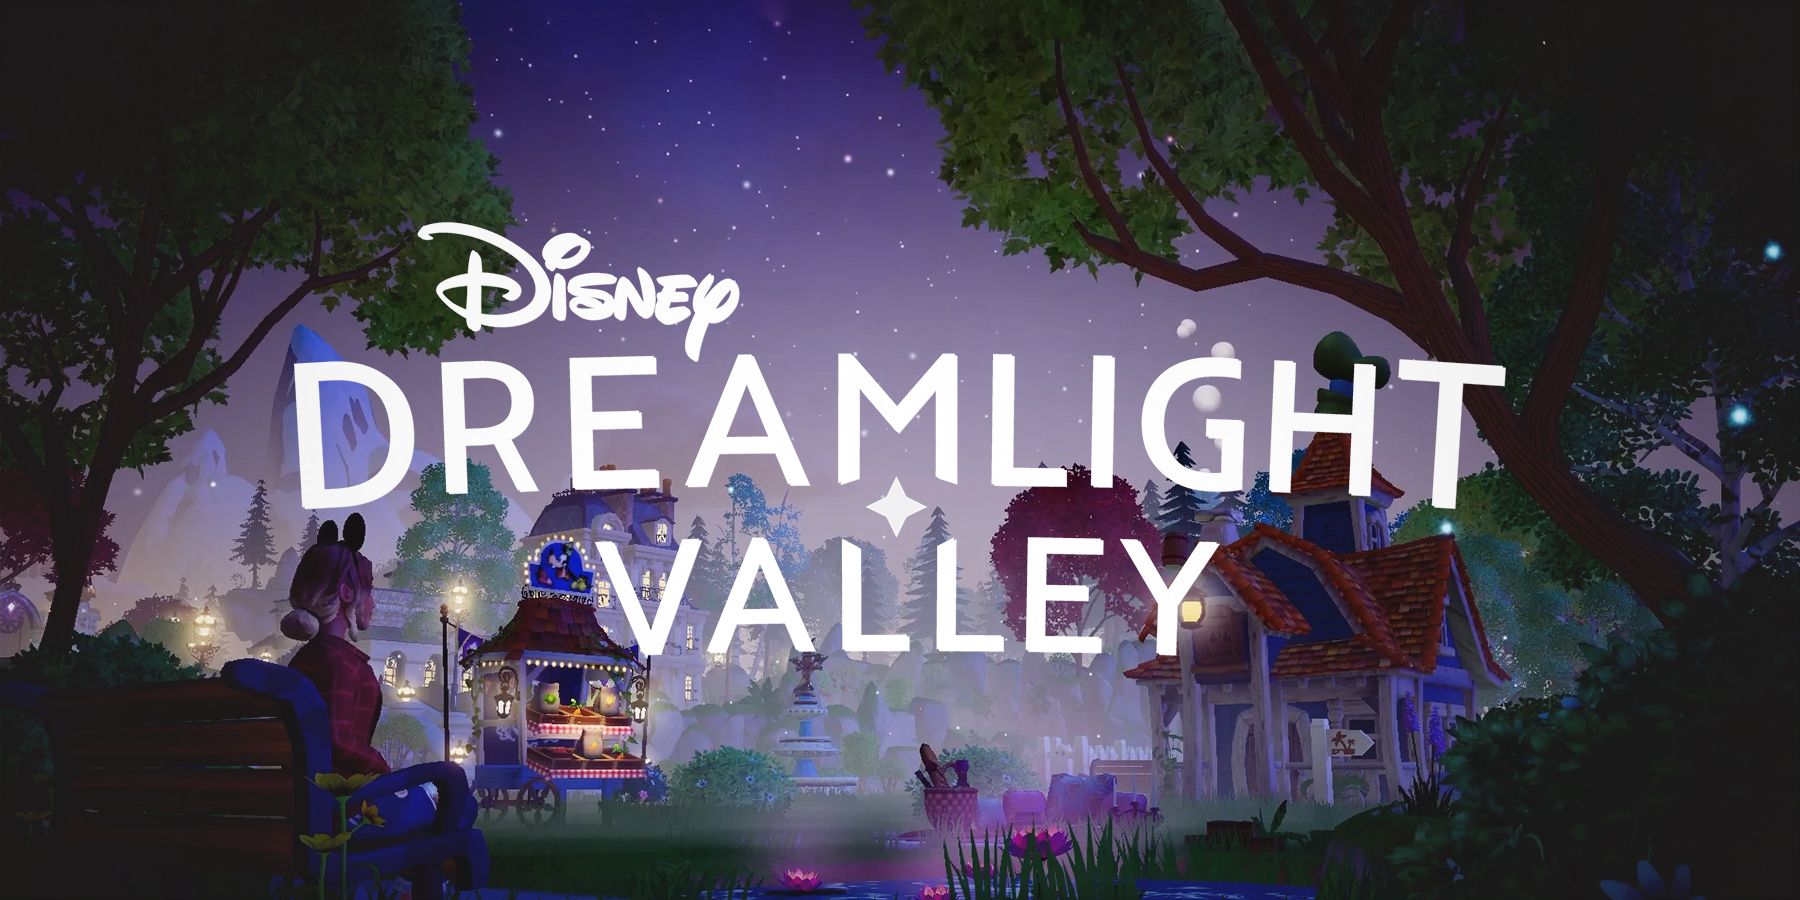 Disney Dreamlight Valley nighttime park promo shot plus game logo